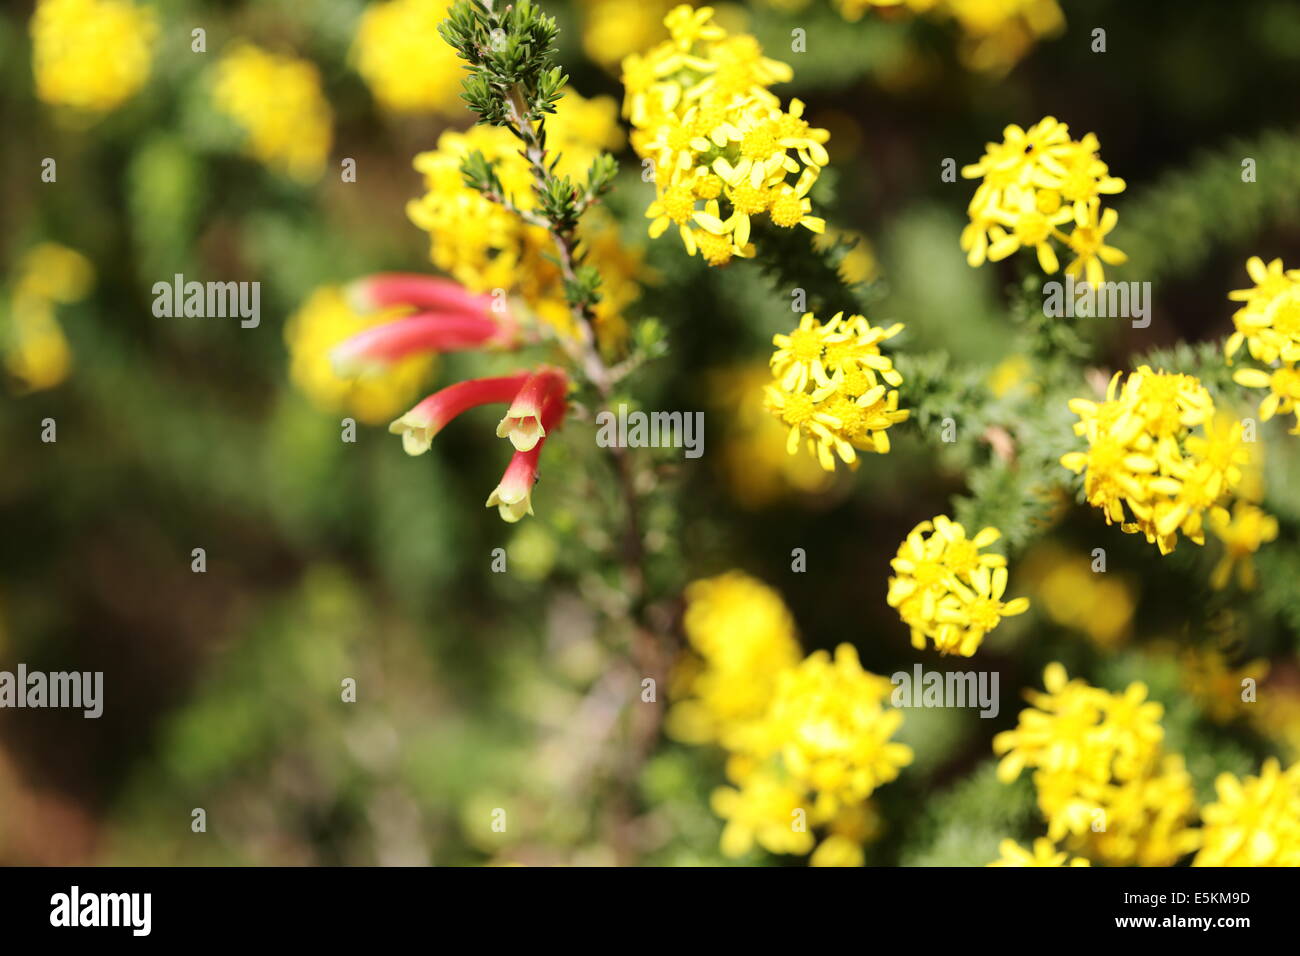 Fynbos species in flower in Betty's Bay, South Africa Stock Photo